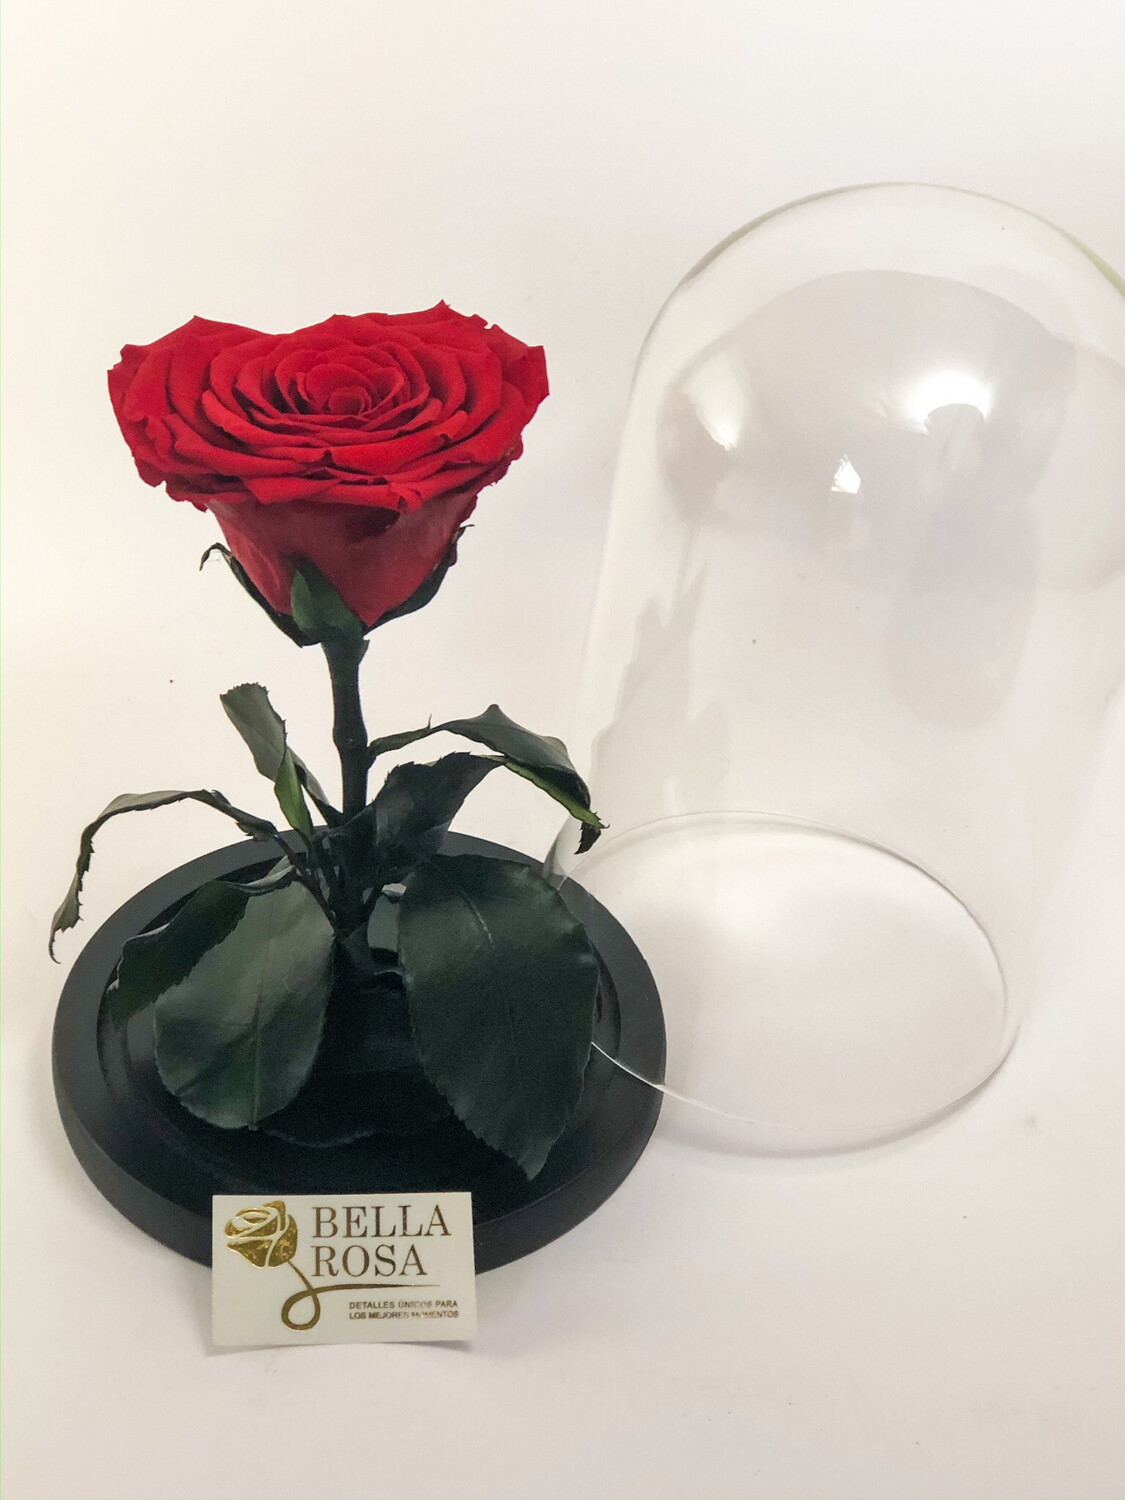 Cúpula de cristal de 21 cm con rosa natural preservada en forma de corazón